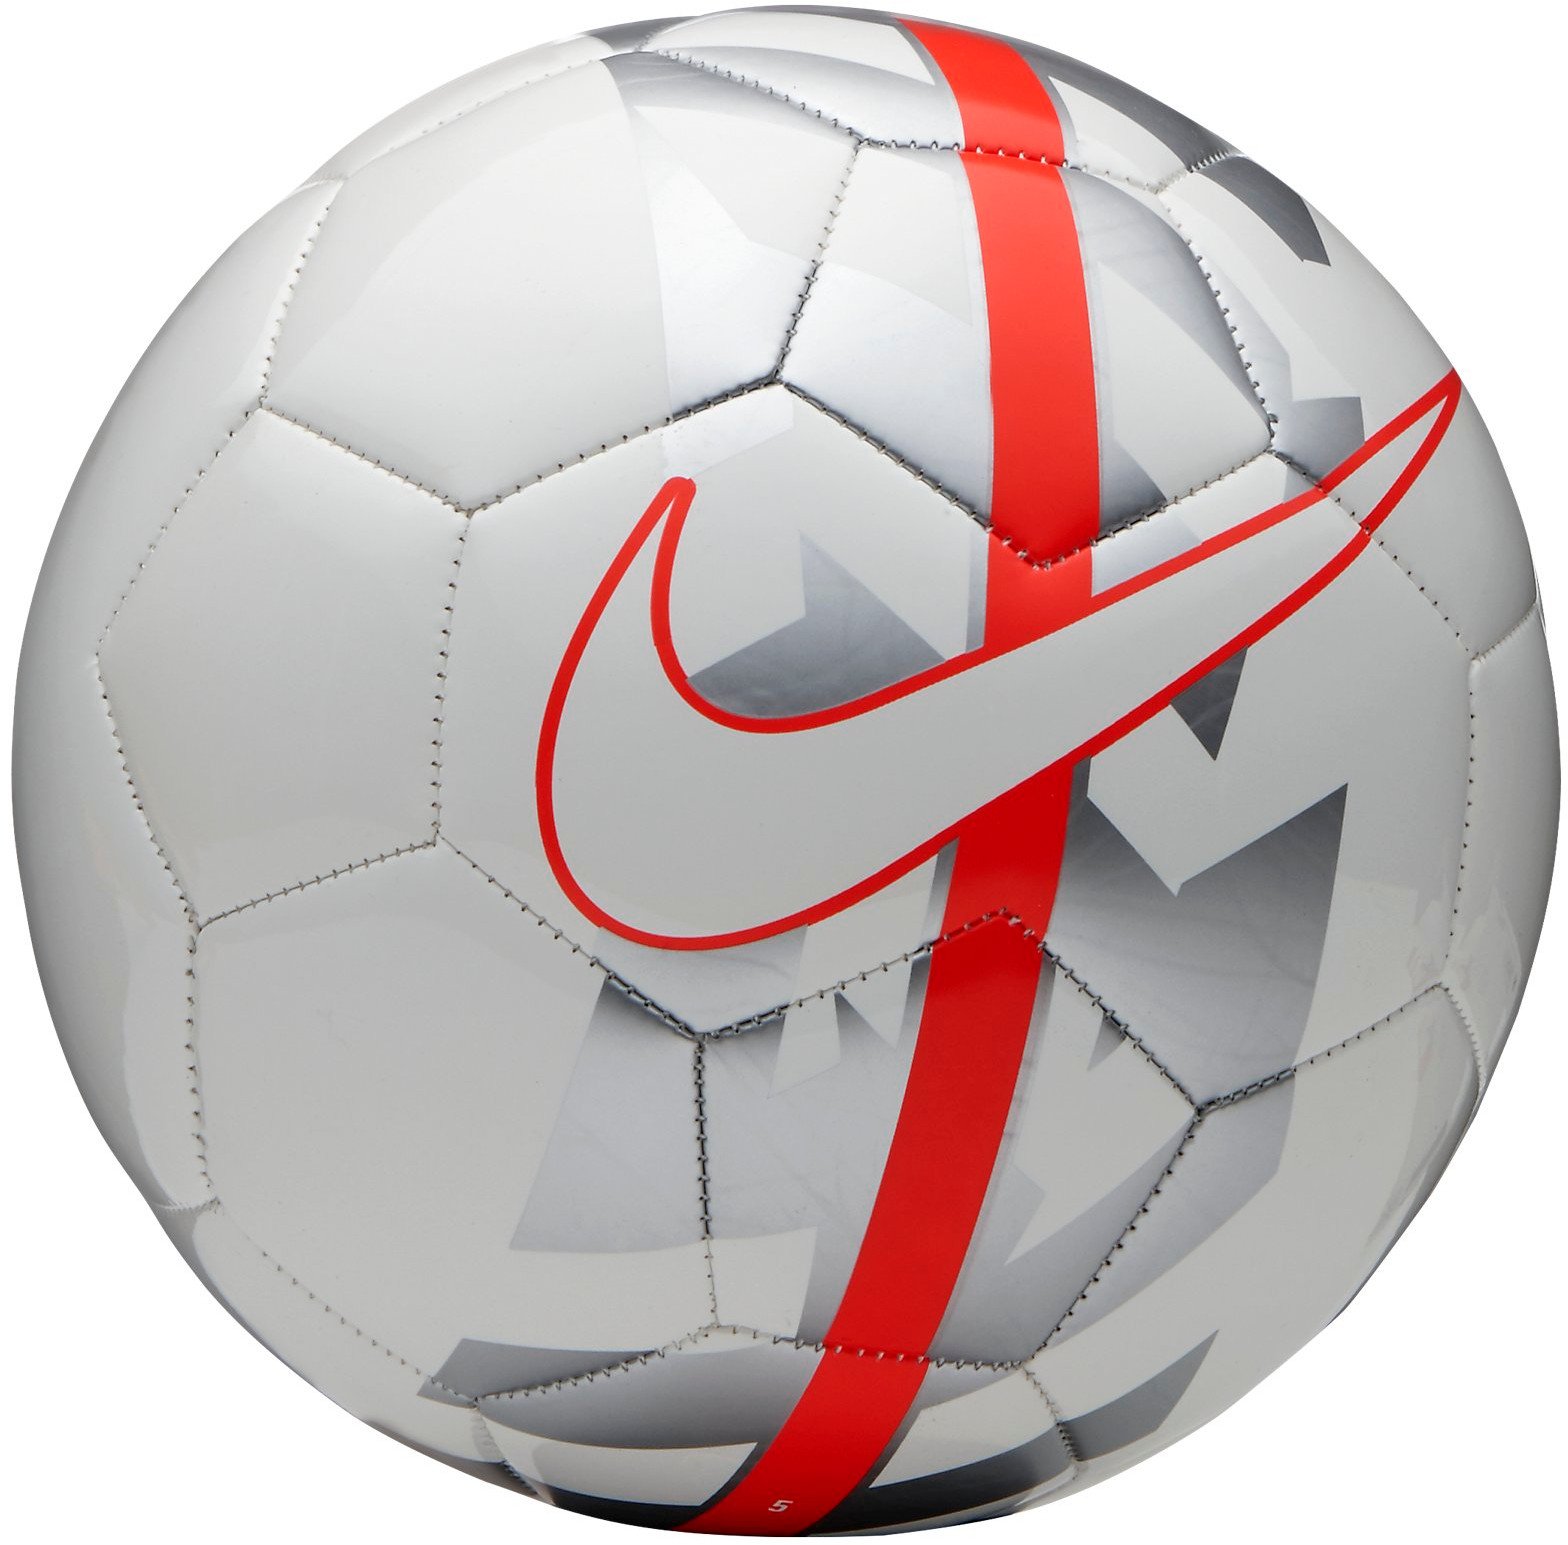 Fotbalový míč Nike React